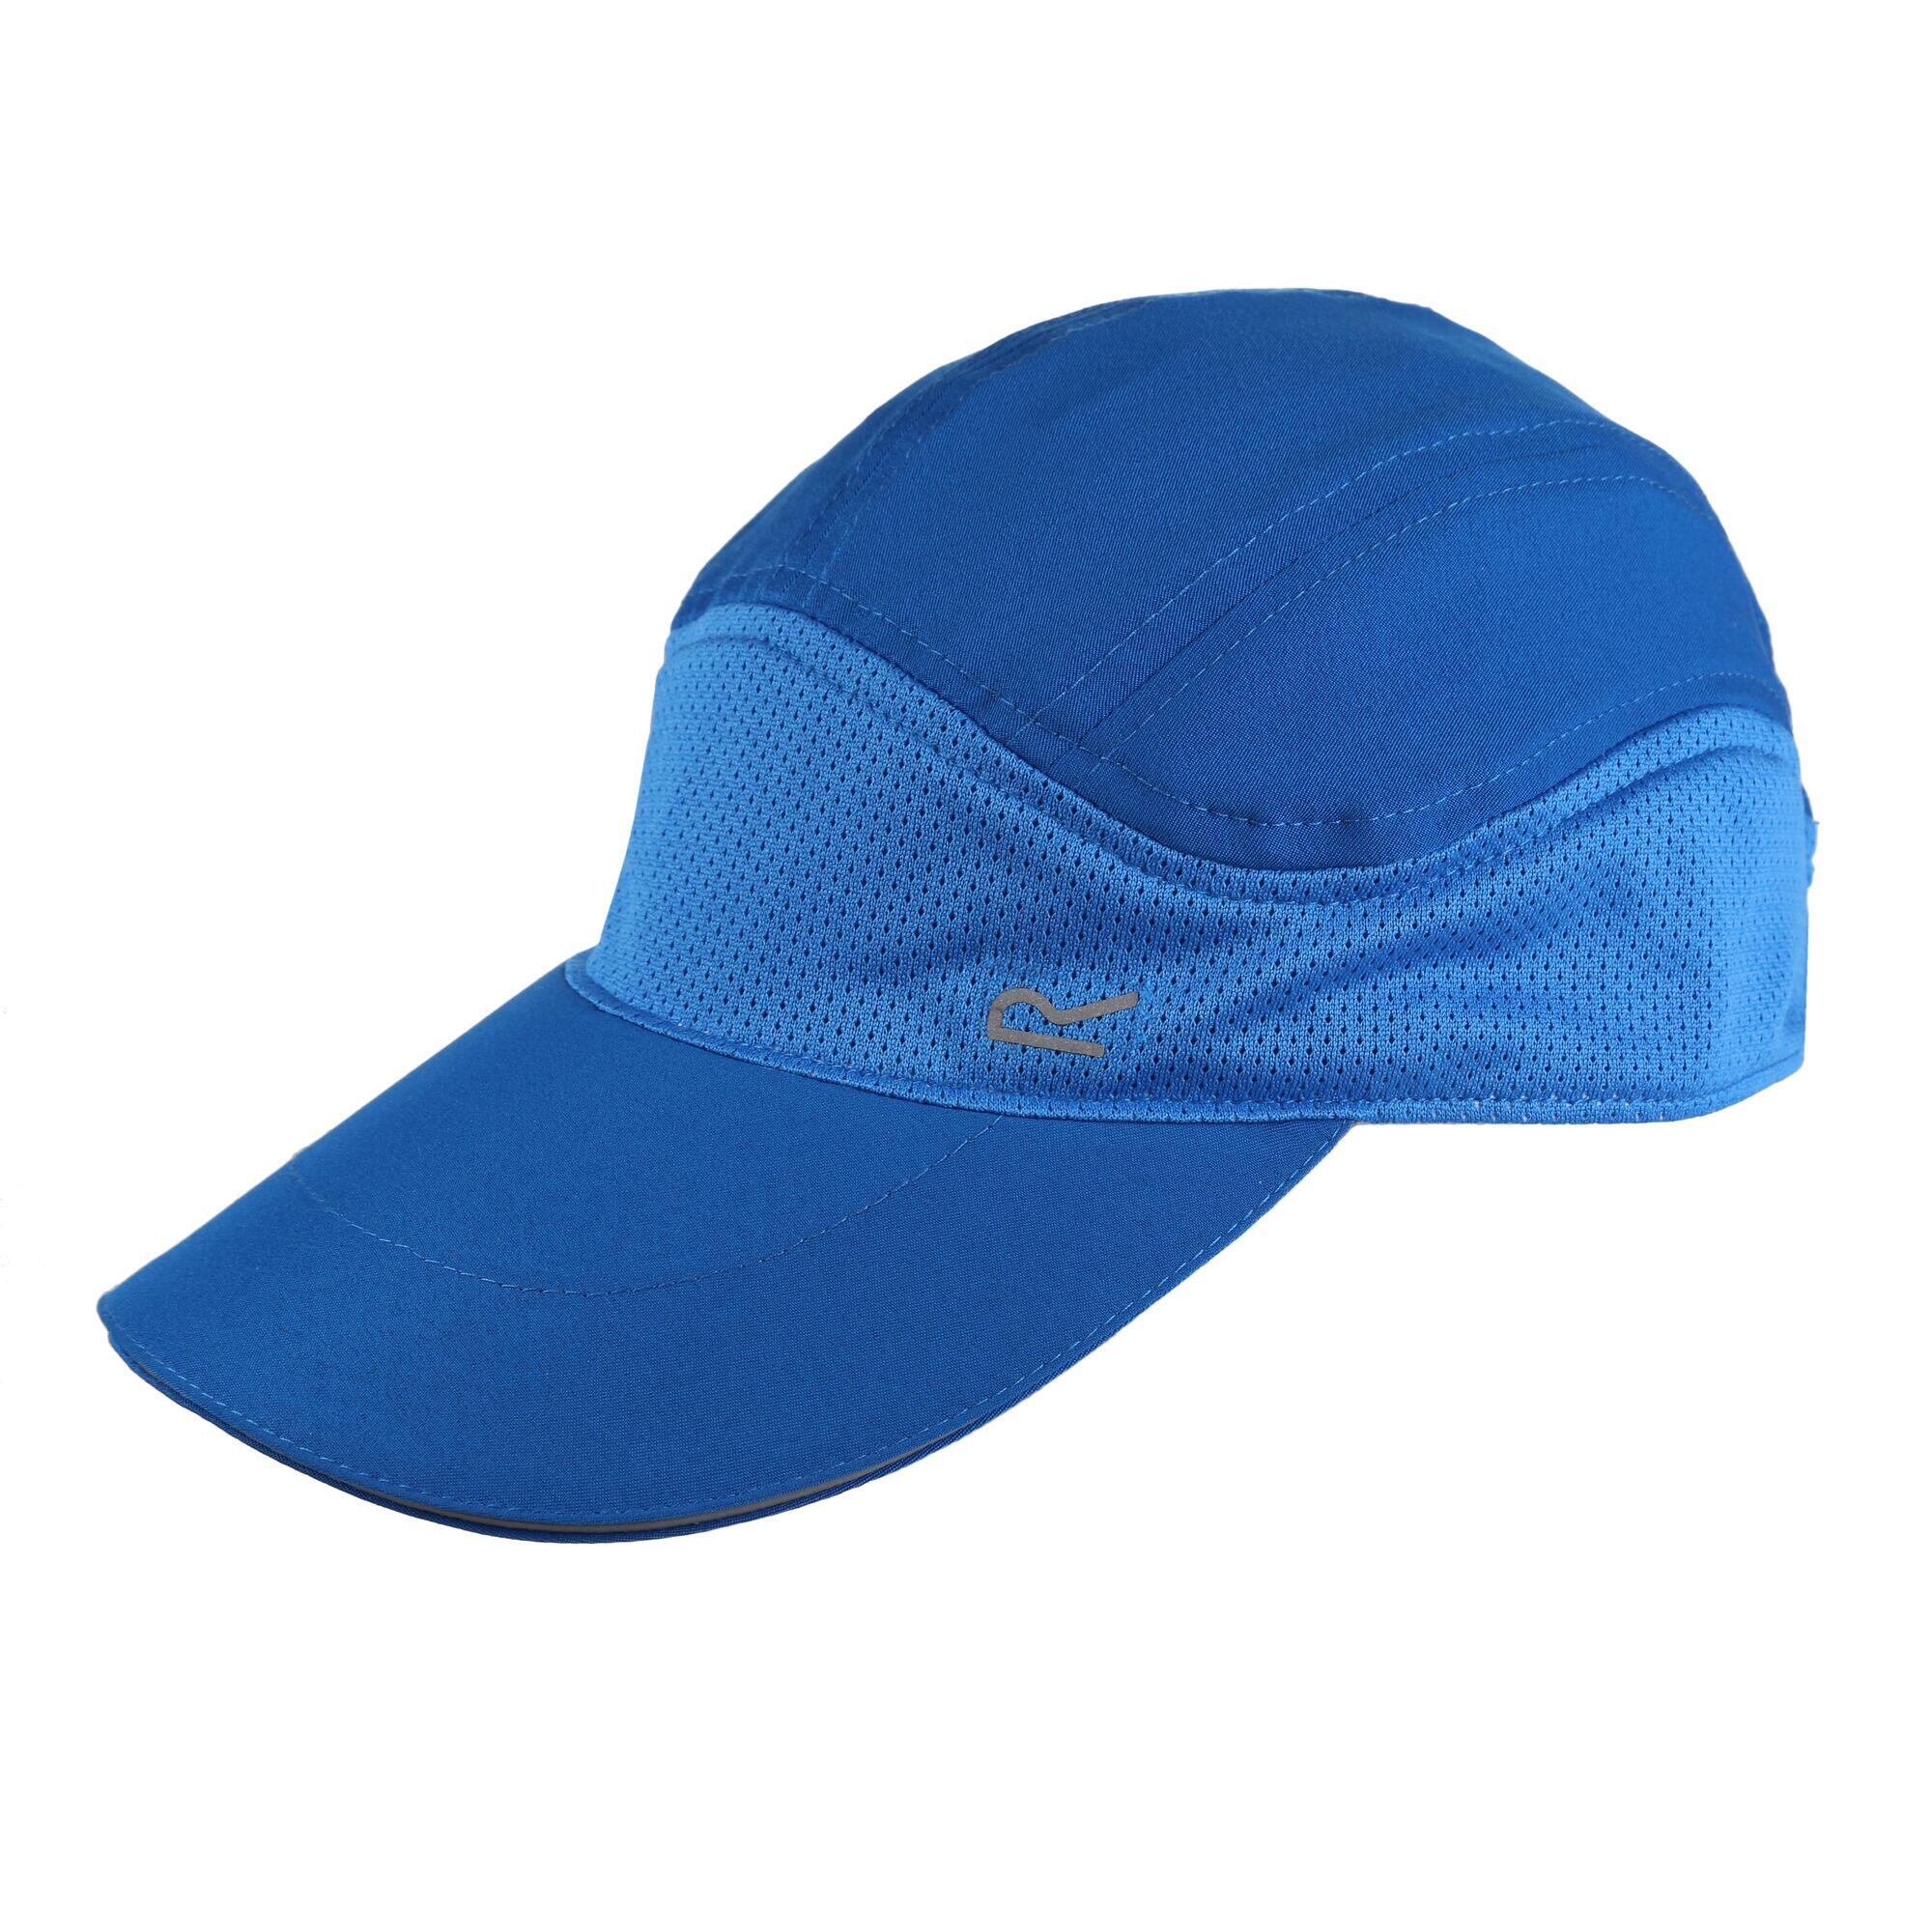 REGATTA Extended II Adults' Unisex Walking Cap - Imperial Blue